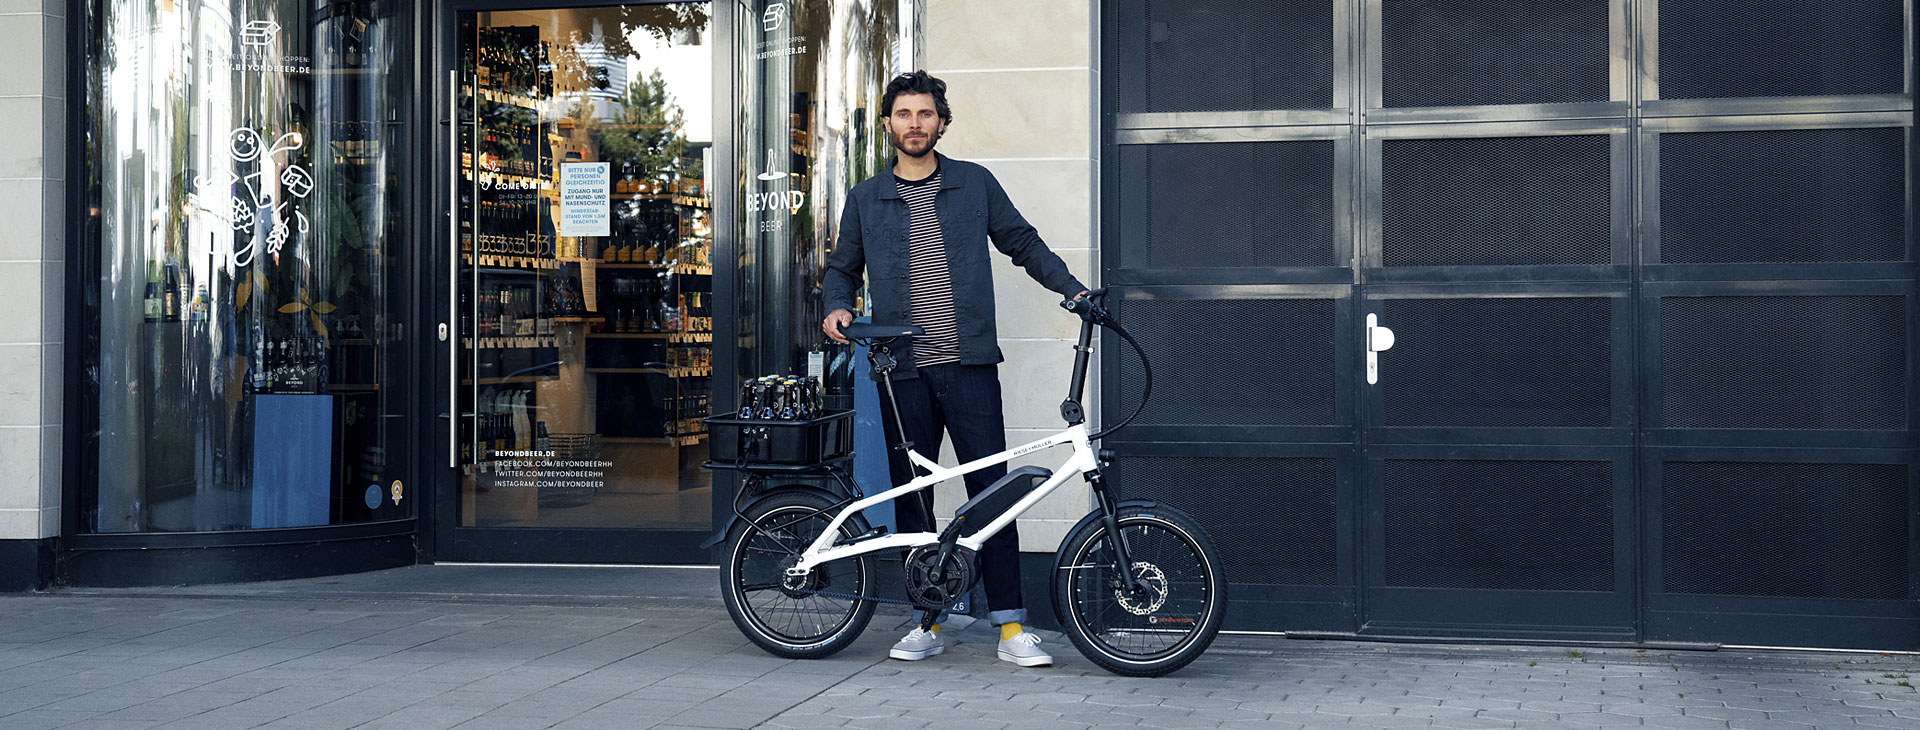 Riese & Müller Tinker - Premium e-bike - Elan Bikes